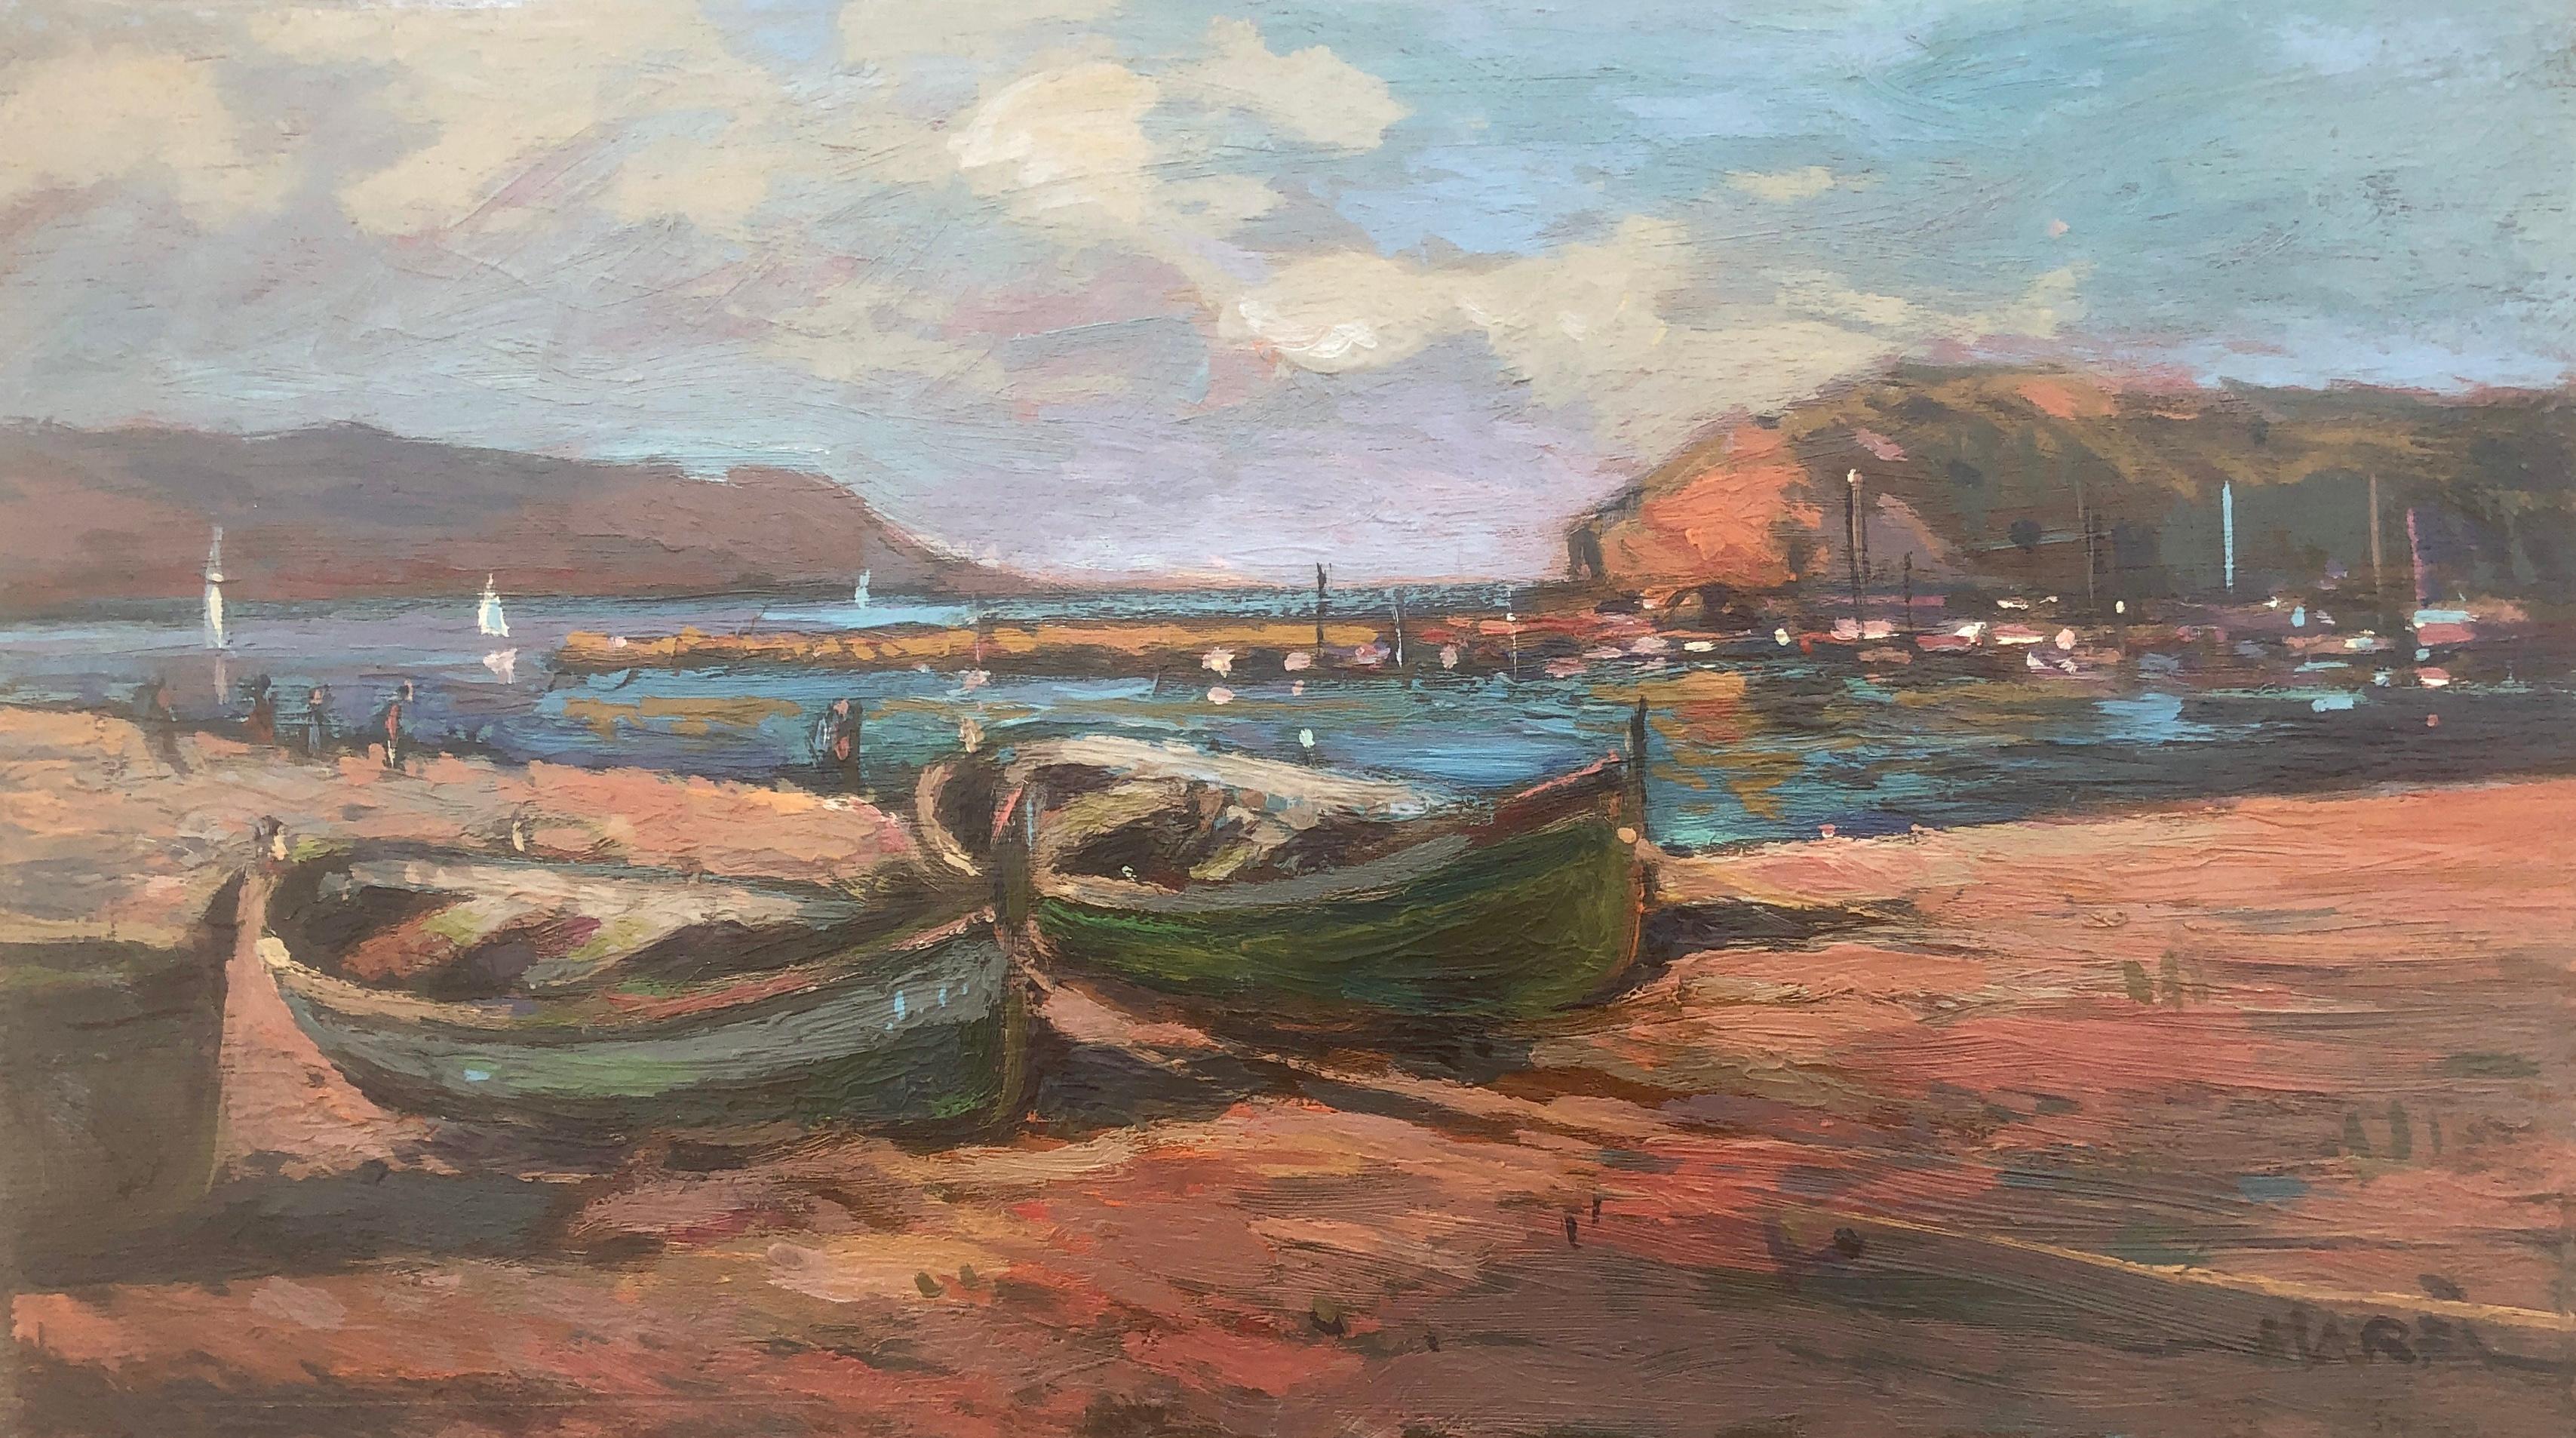 Josep Marfa Guarro Figurative Painting - Fishermen's beach spanish seascape original oil on board painting mediterranean